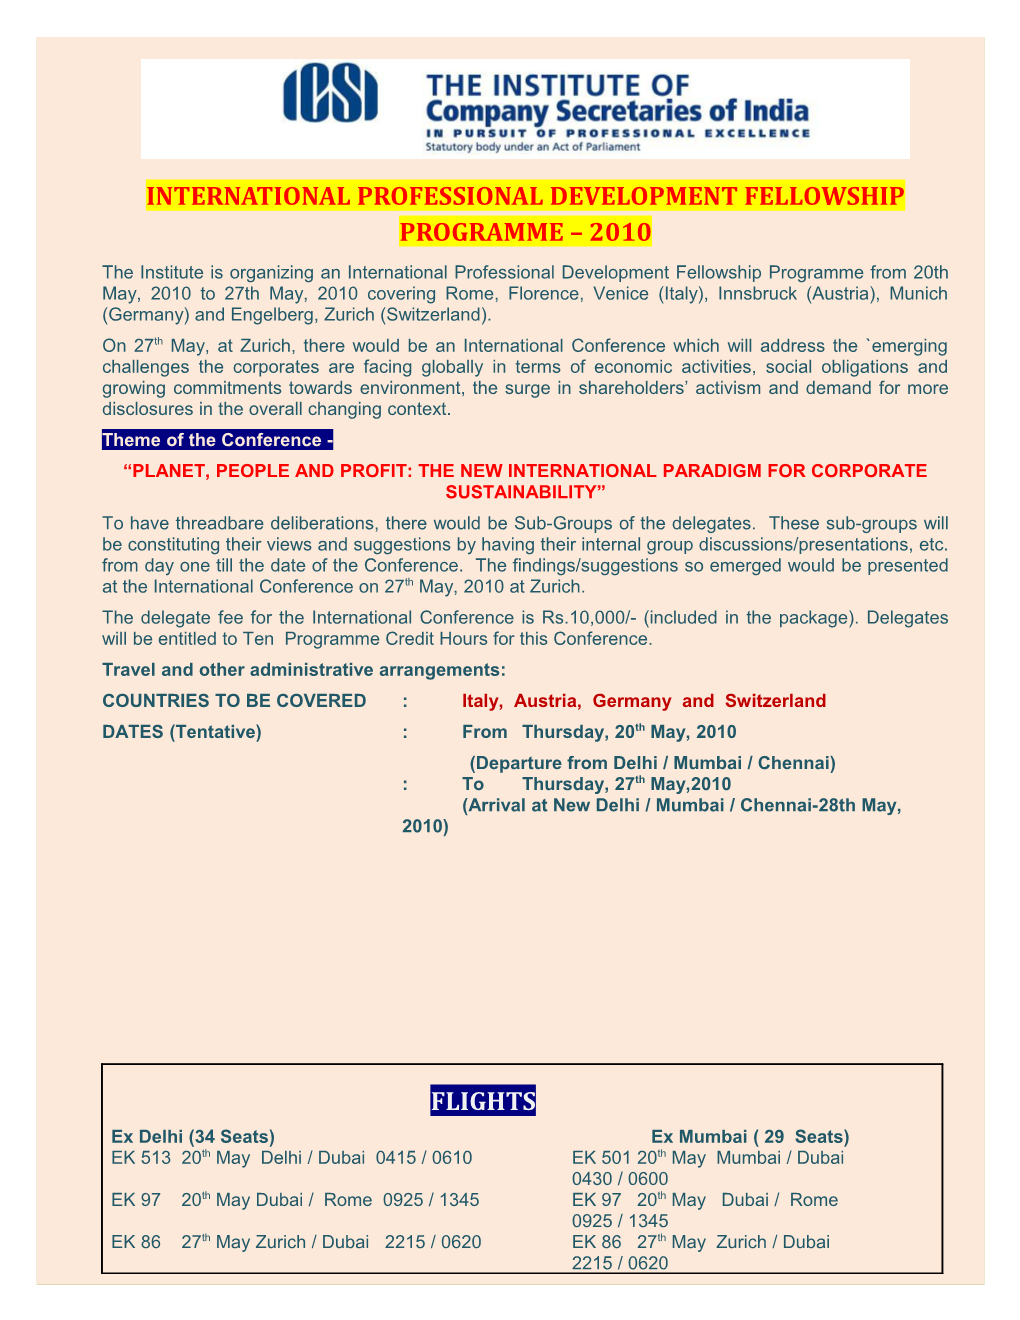 International Professional Development Fellowship Program 2010